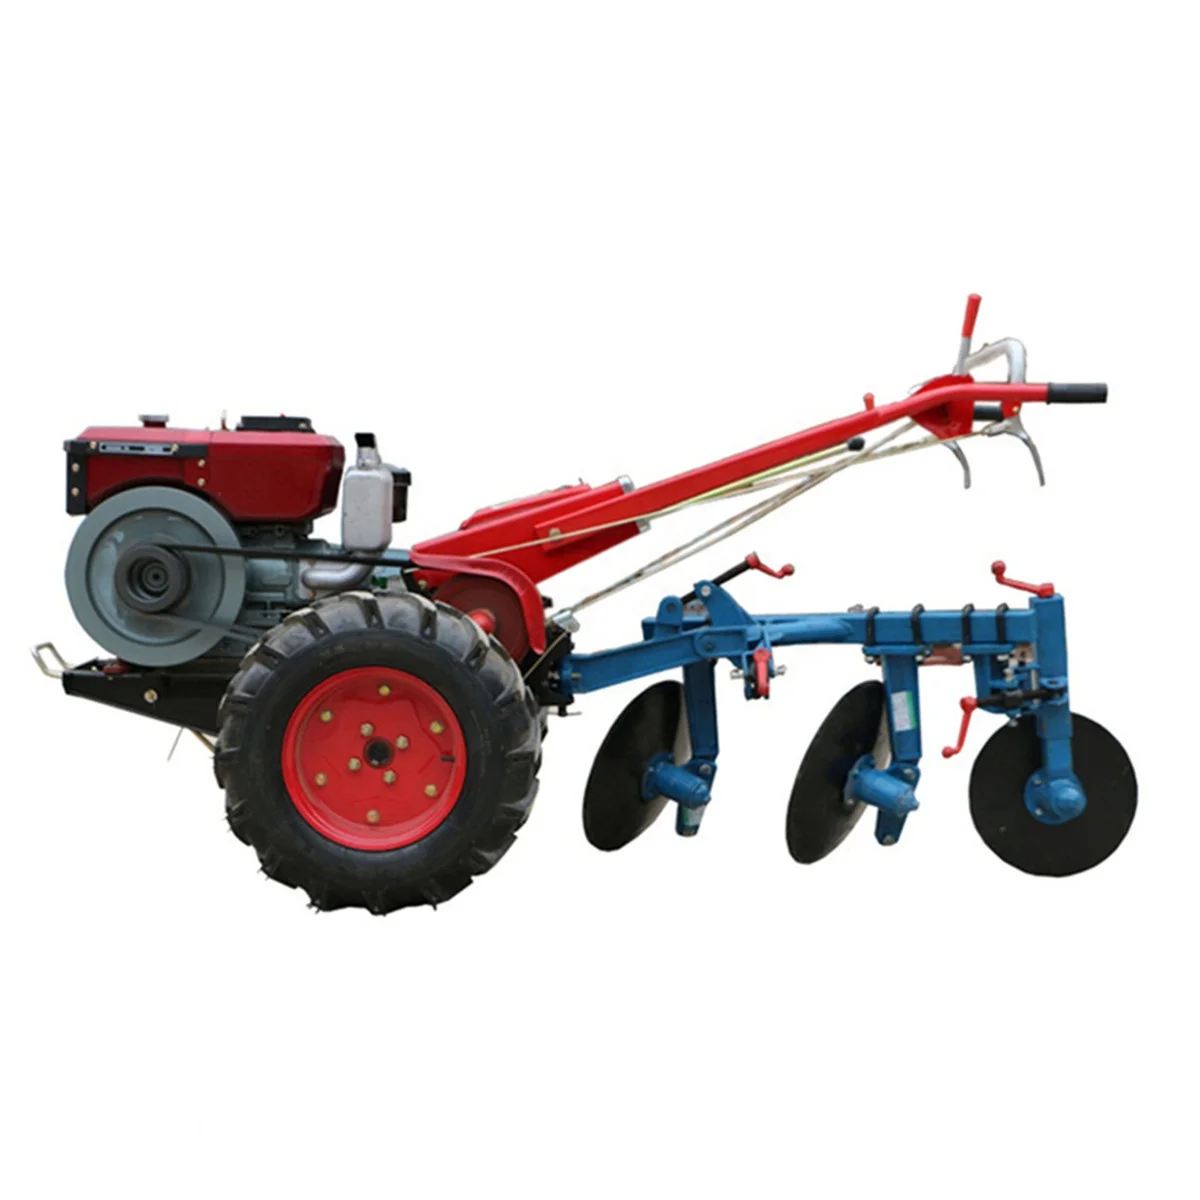 14.7 Kw Hand Walking Tractor Plough For Walking Tractor Price - Buy Plough  For Walking Tractor,Walking Tractor Price,Hand Walking Tractor Product on  Alibaba.com